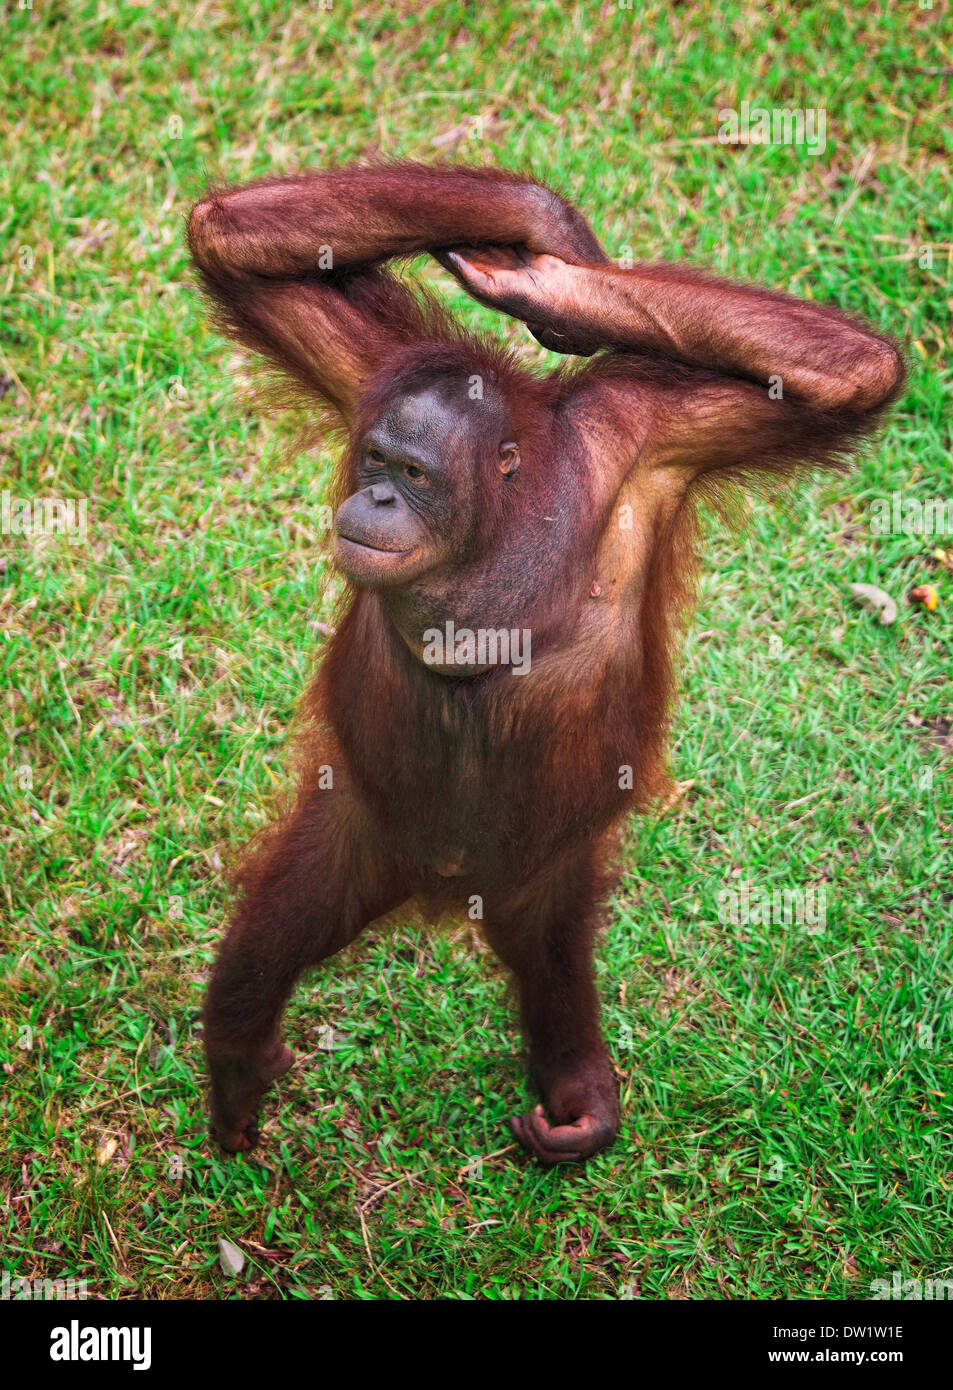 orangutang portrait Stock Photo